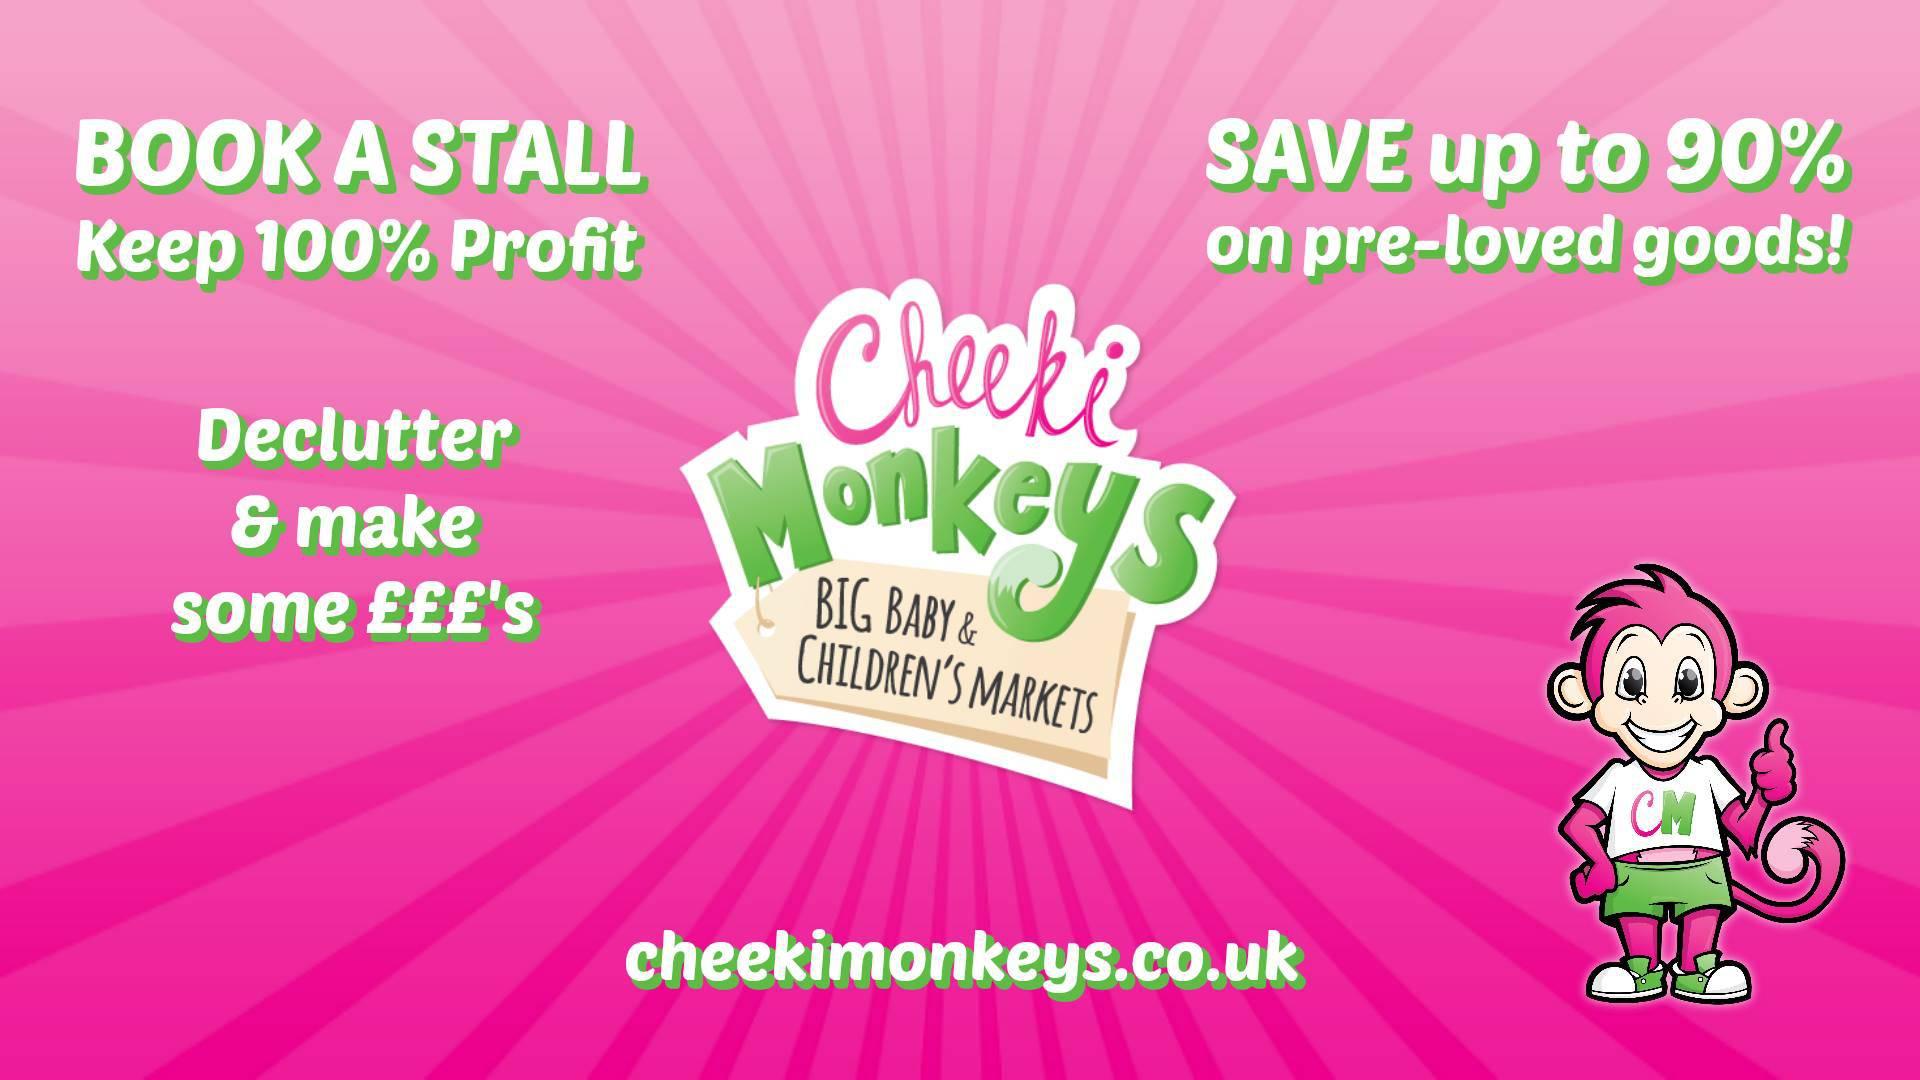 Cheeki Monkeys Baby and Childrens Markets photo